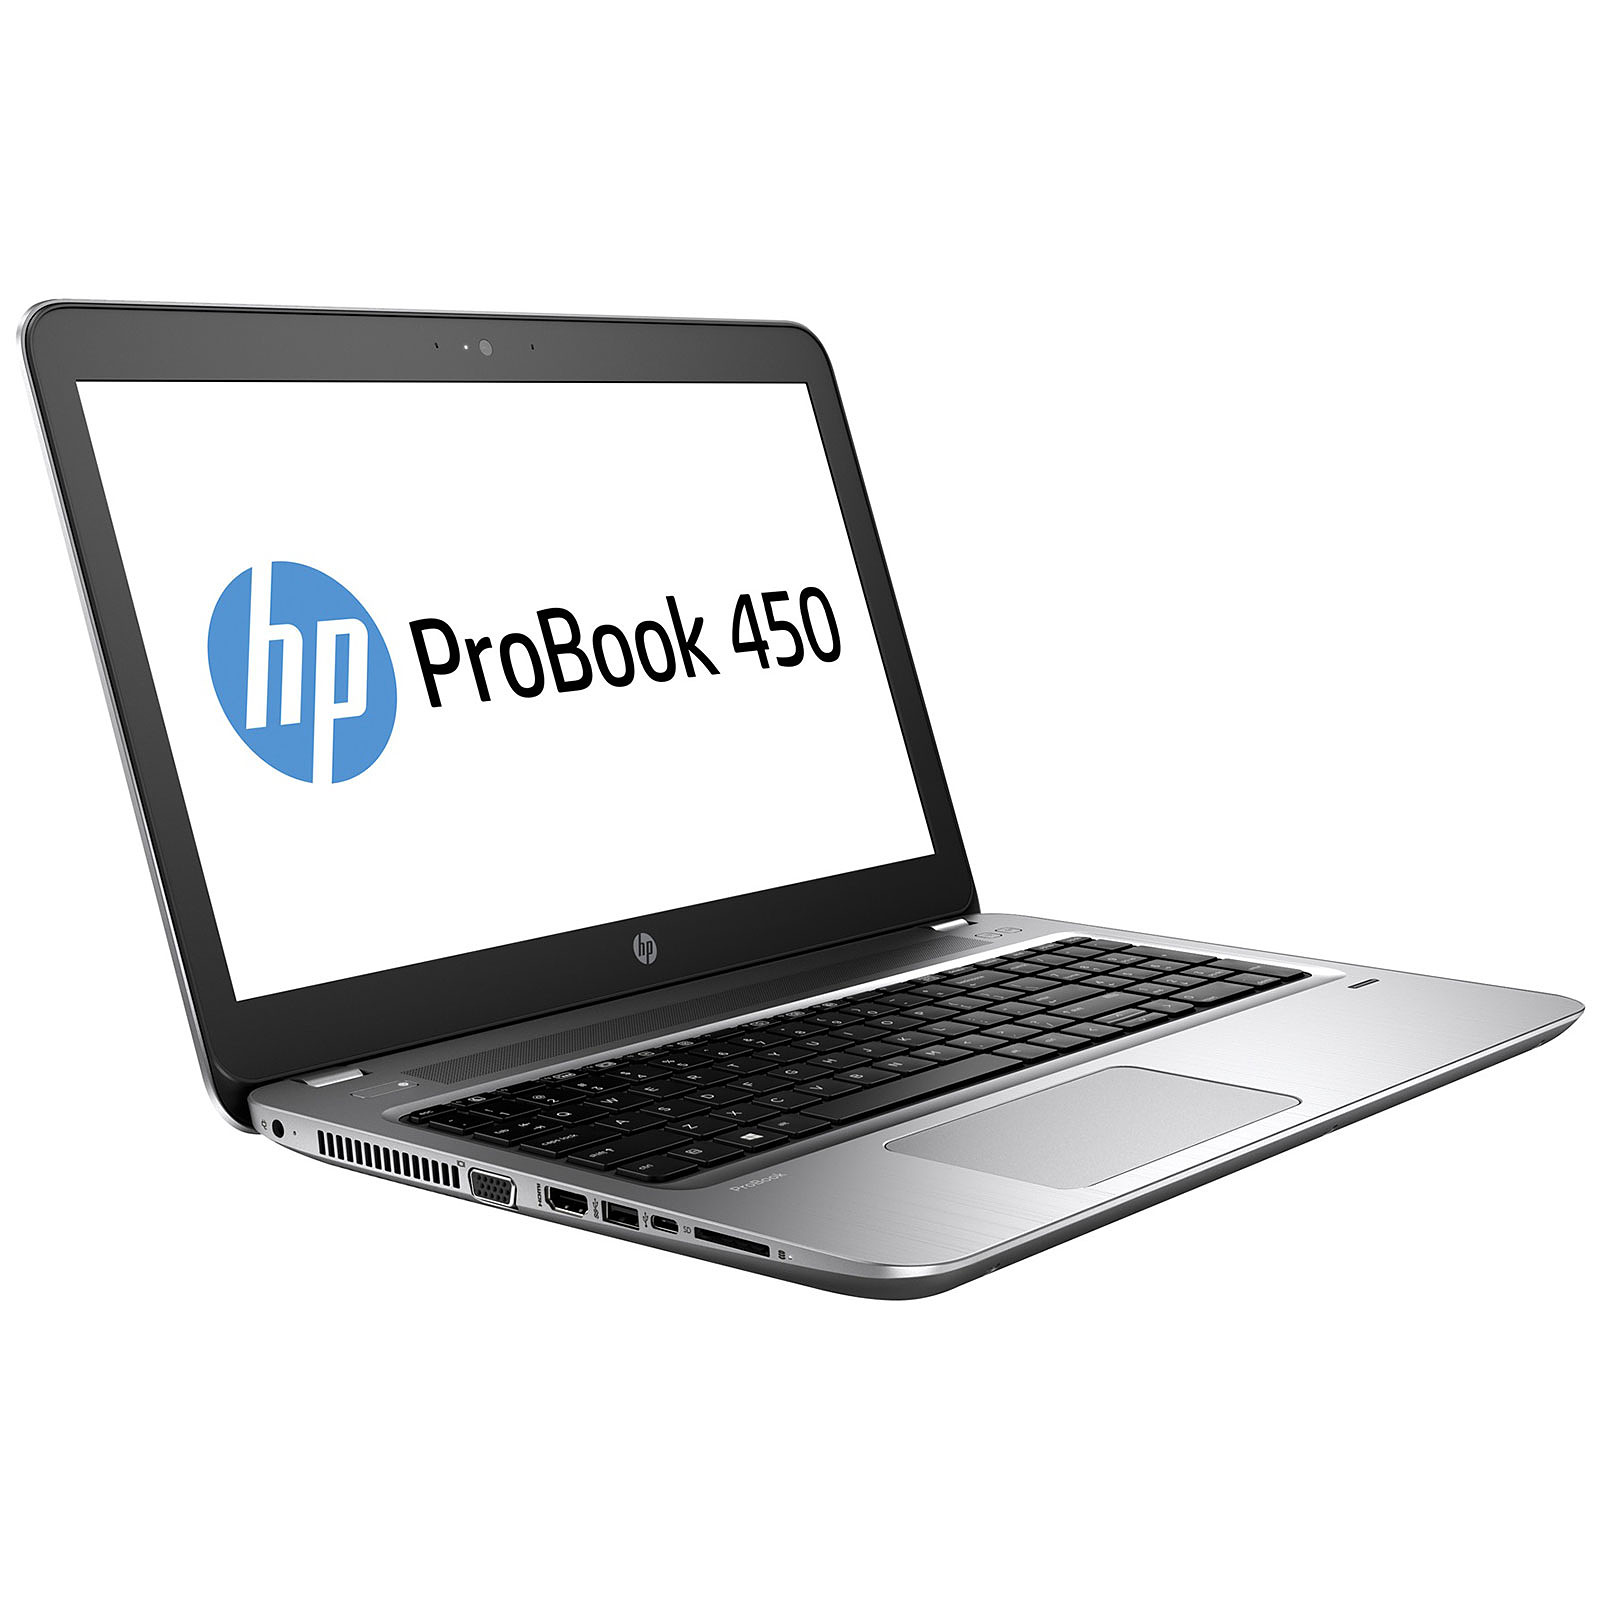 HP Probook 450 G2 Core I5-4210 1.7 Ghz 8GB 240GB SSD DVD Webcam 15.6" Win 10 Pro - H1111222C